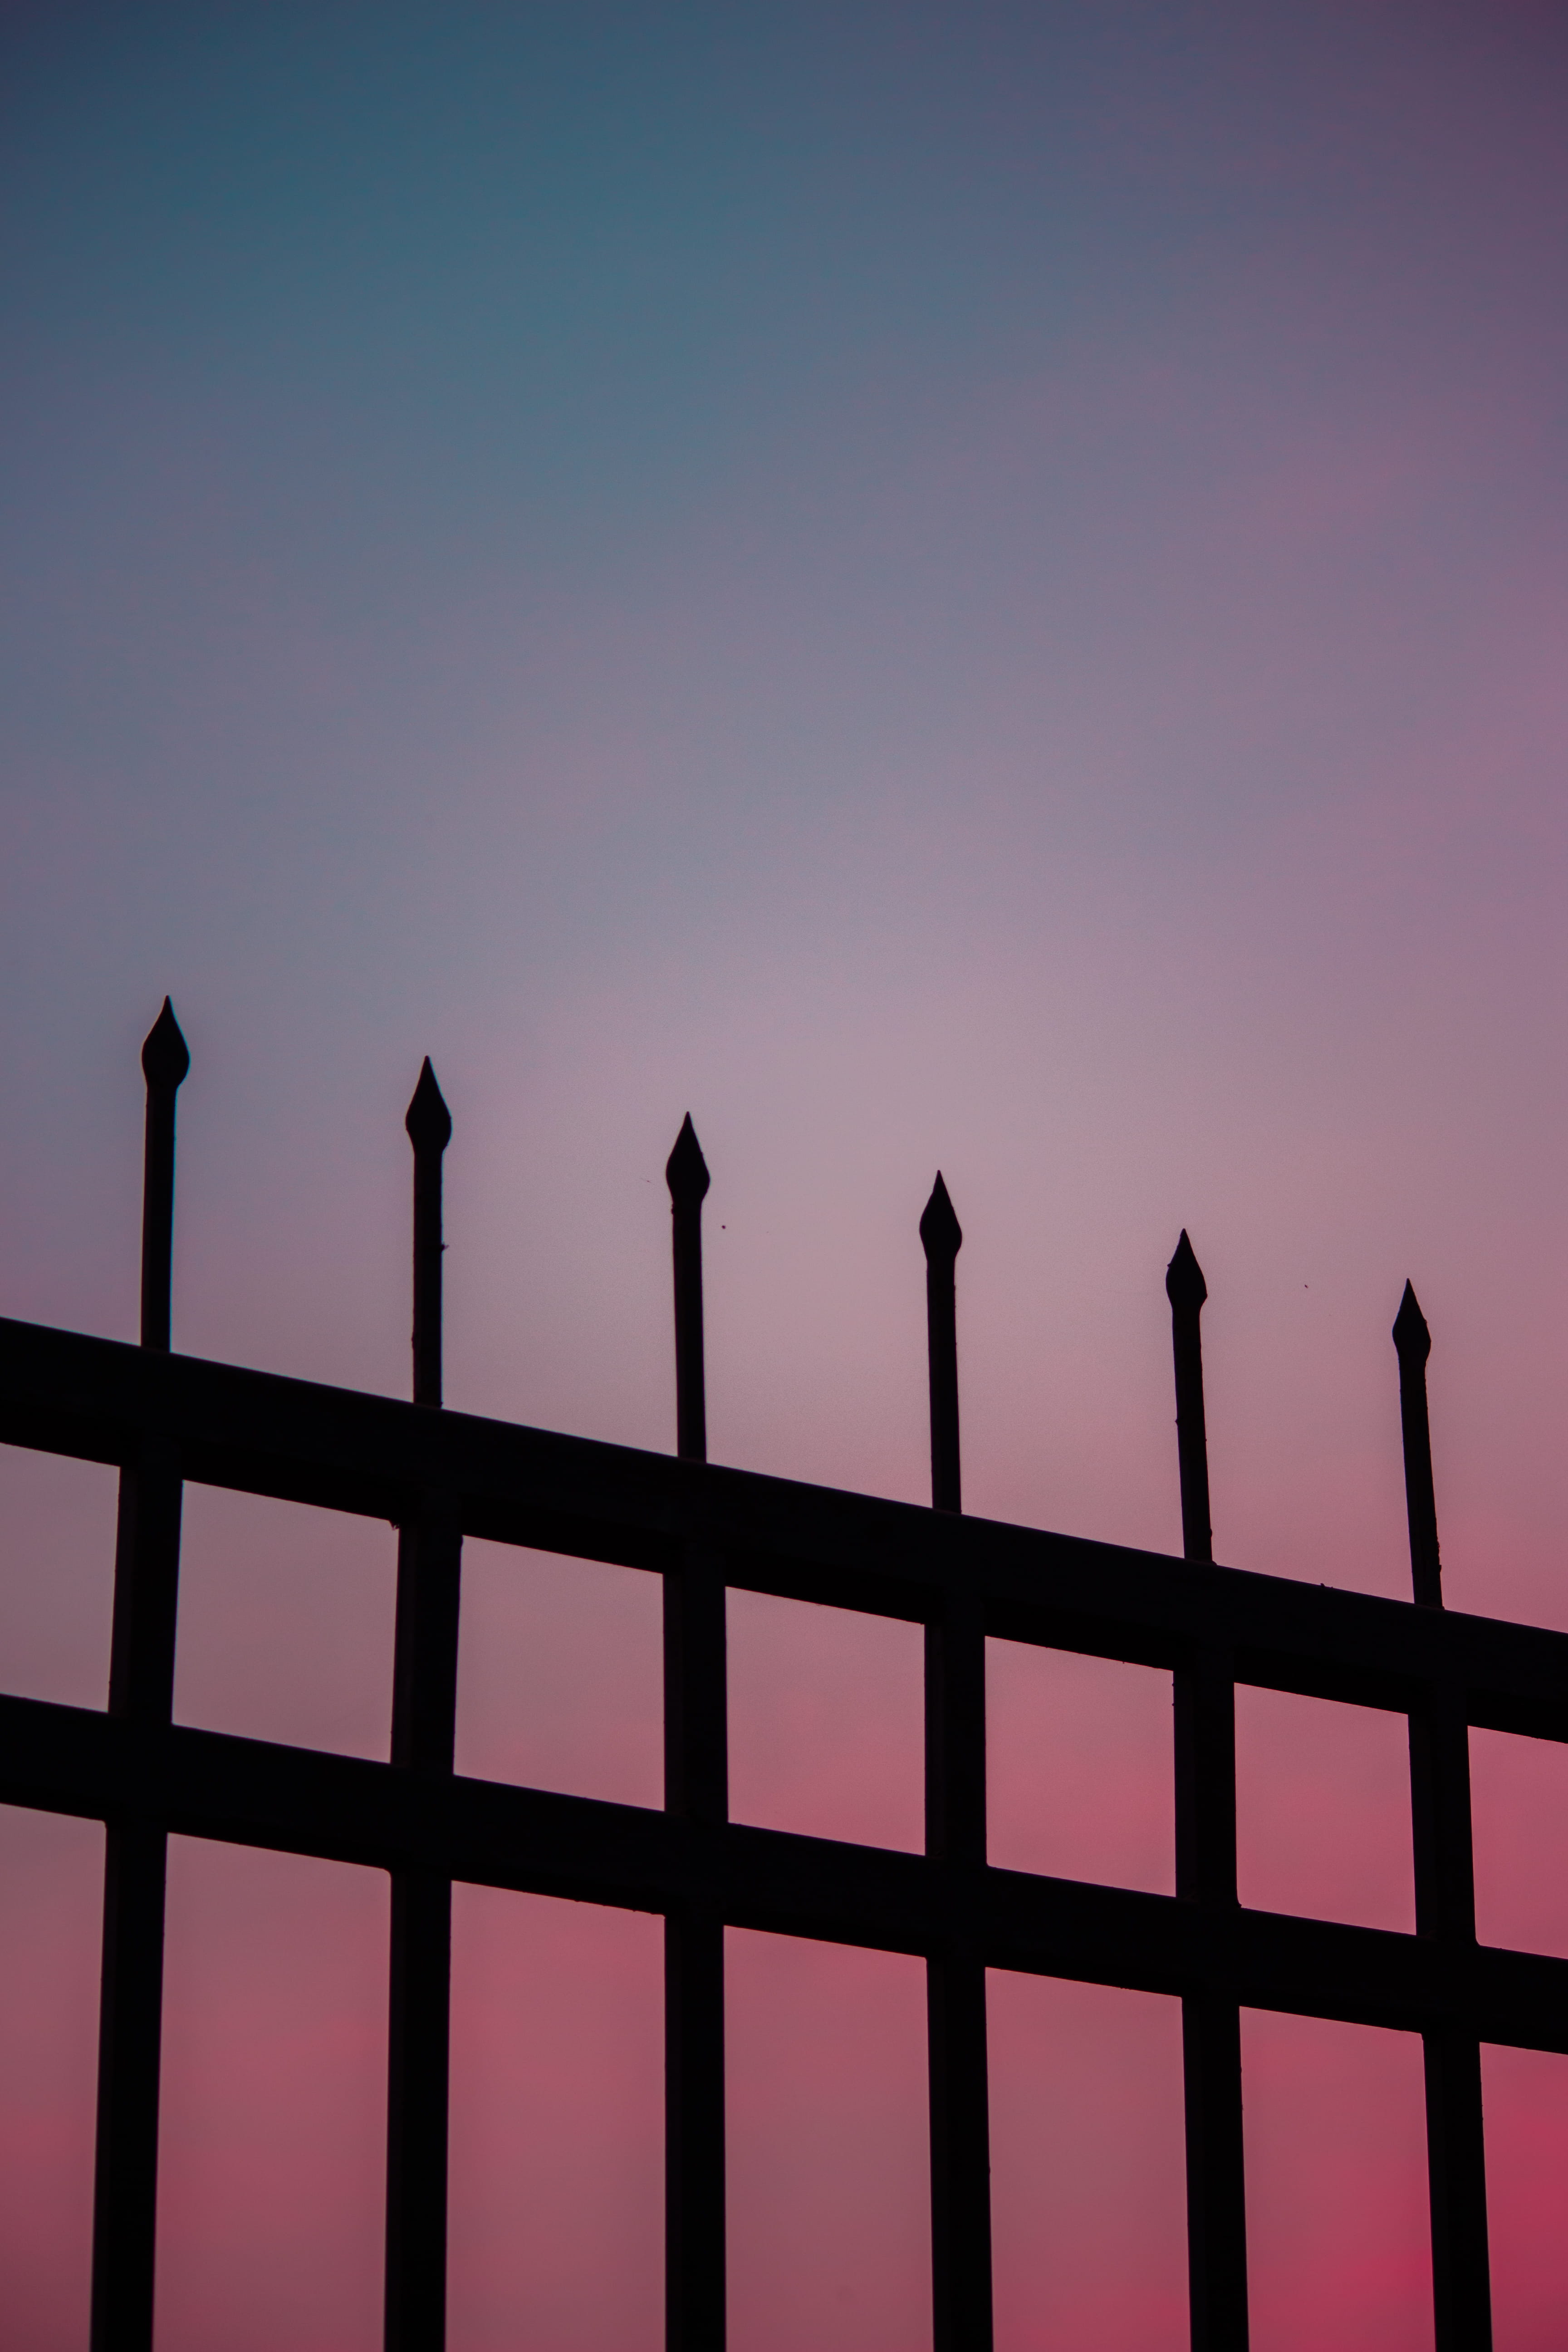 minimal, pastel, iphone wallpaper, pink, sky, sunset, fence